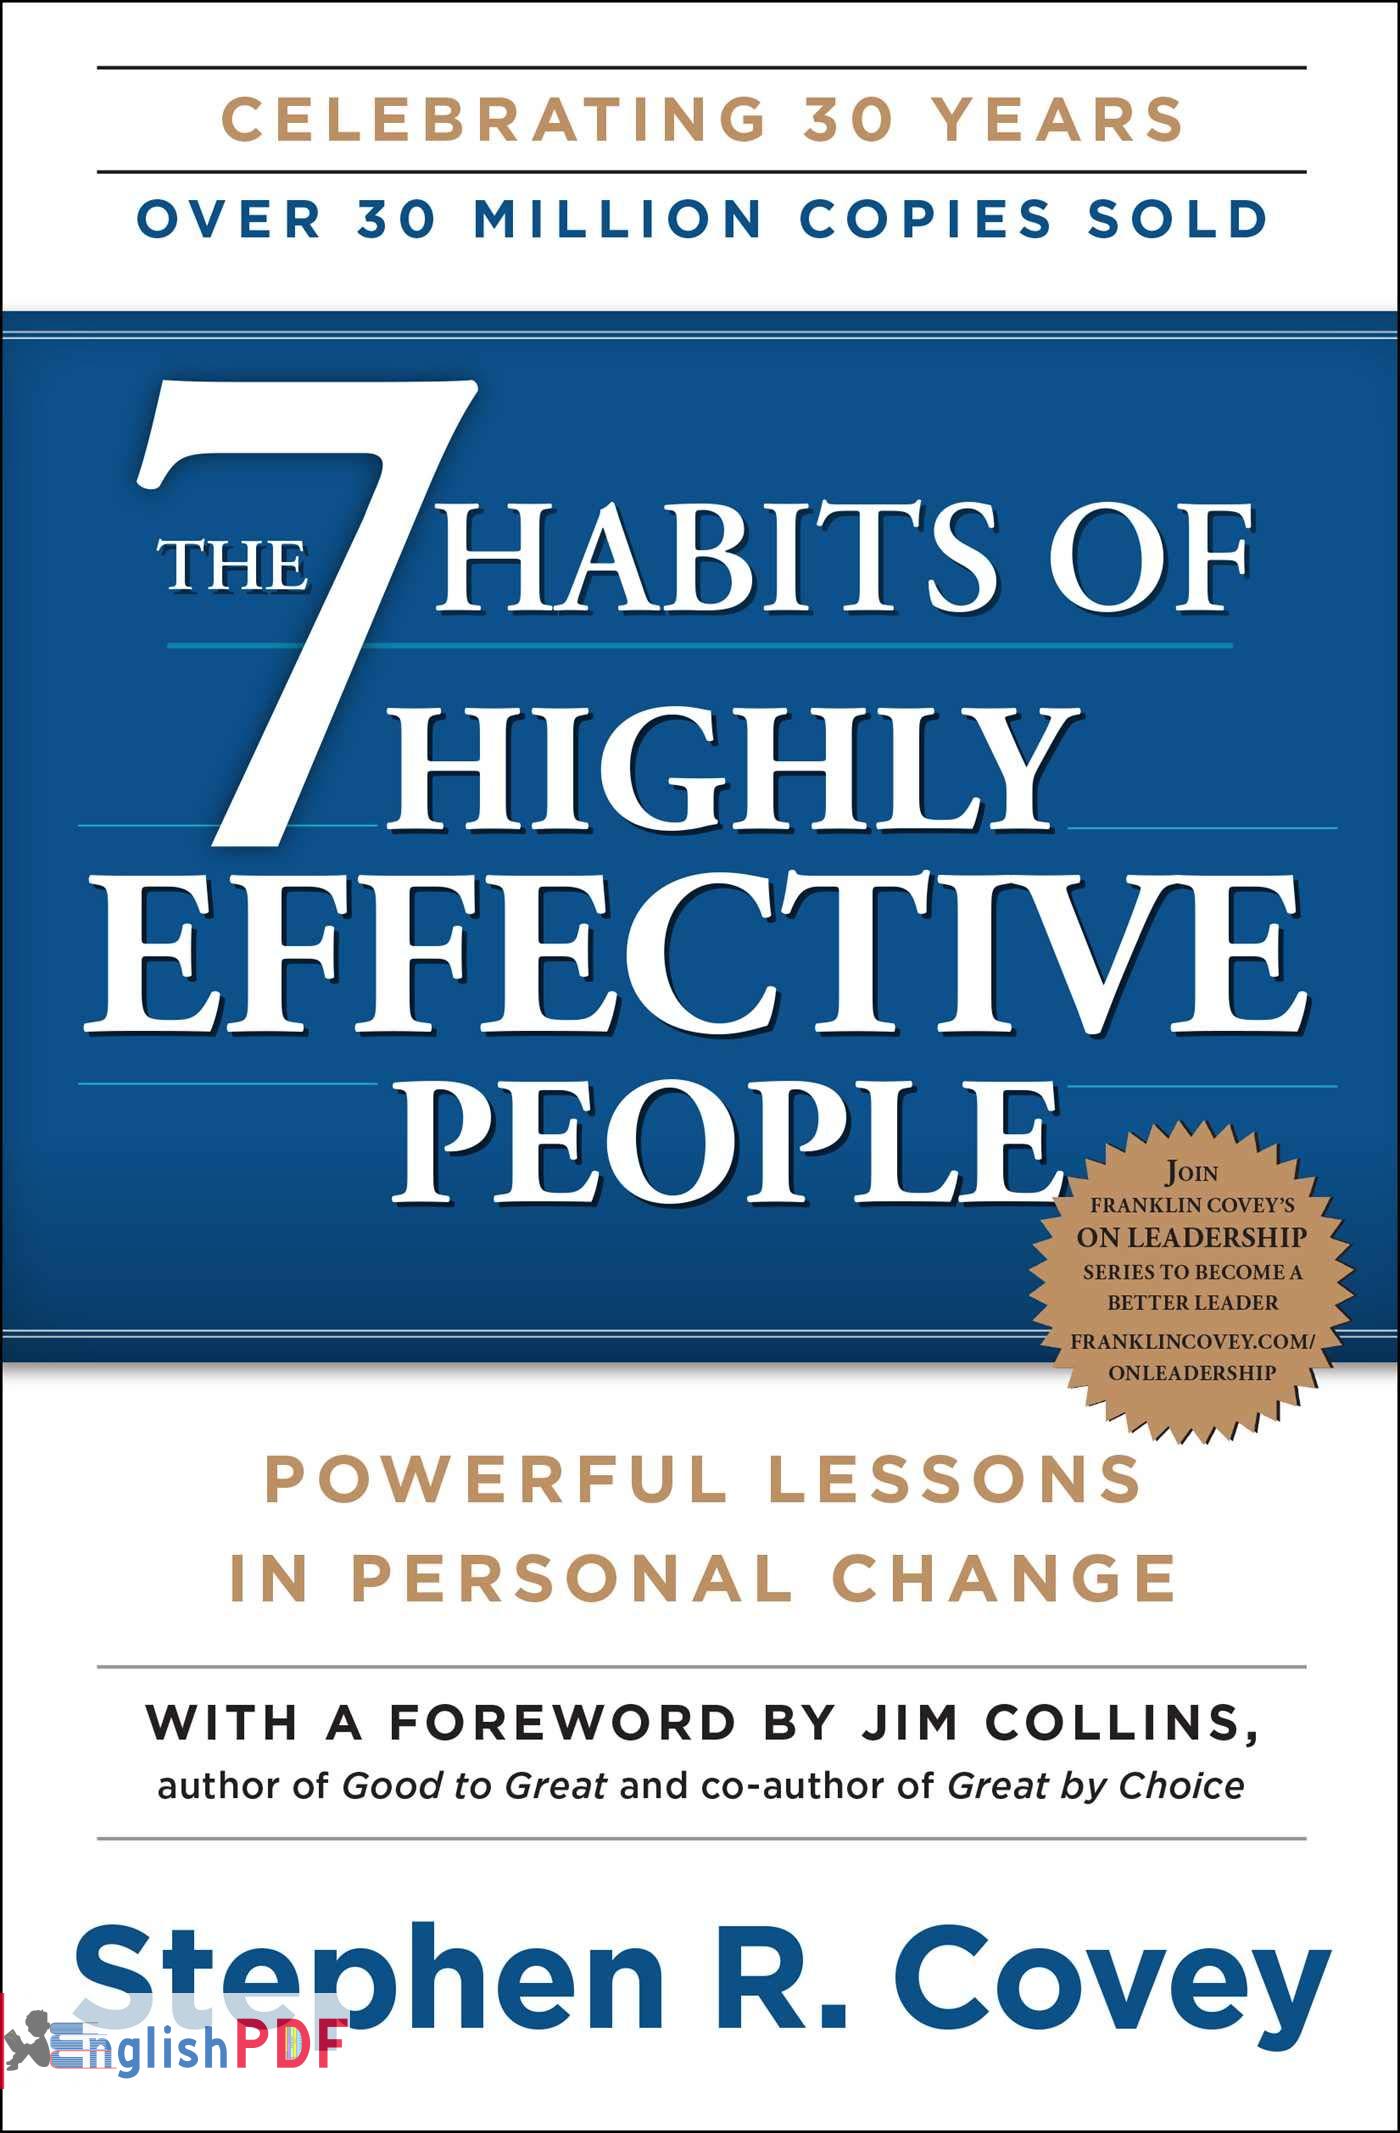 7 habits of highly effective people bangla version pdf download